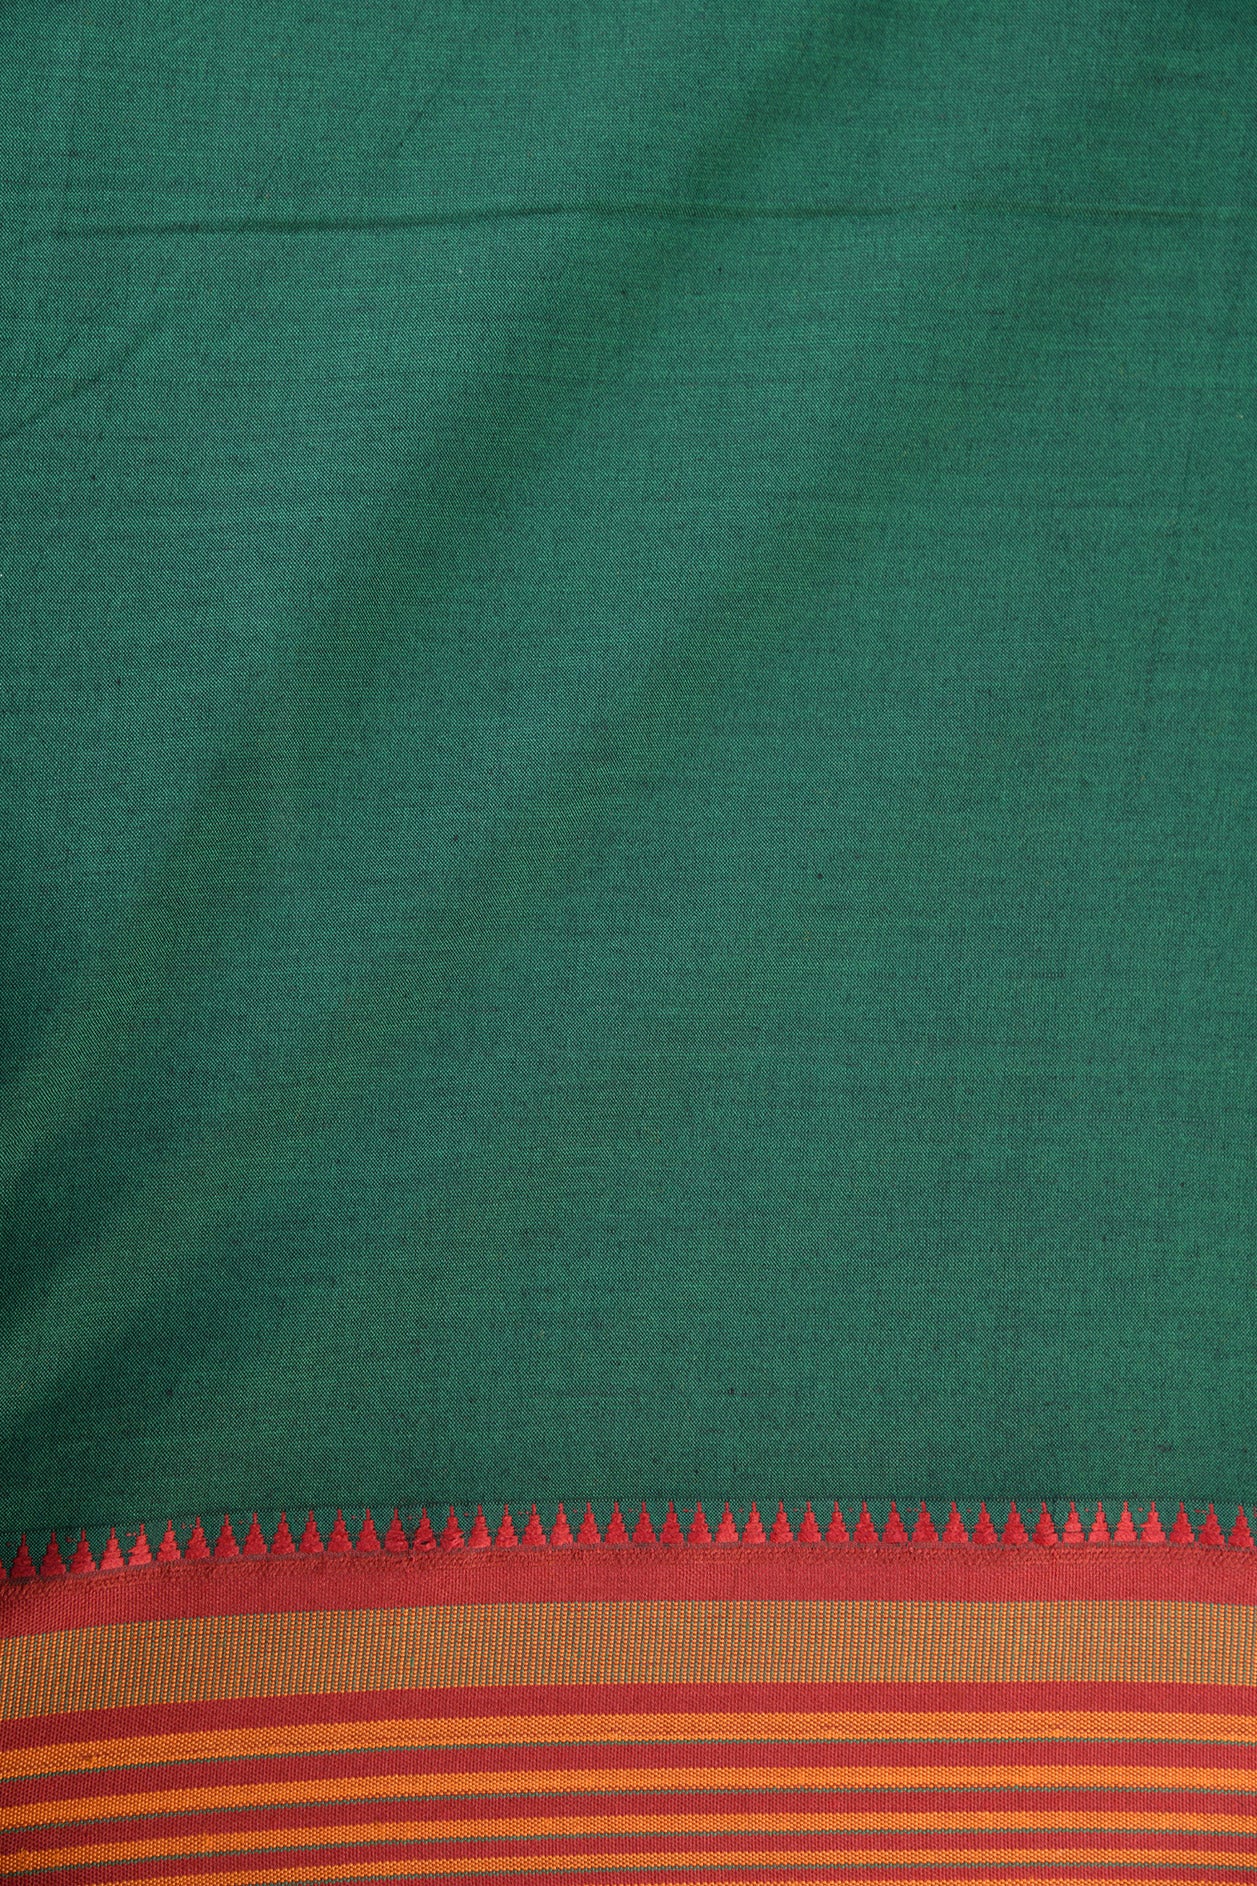 Kasuti Embroidery Work Forest Green Dharwad Cotton Saree